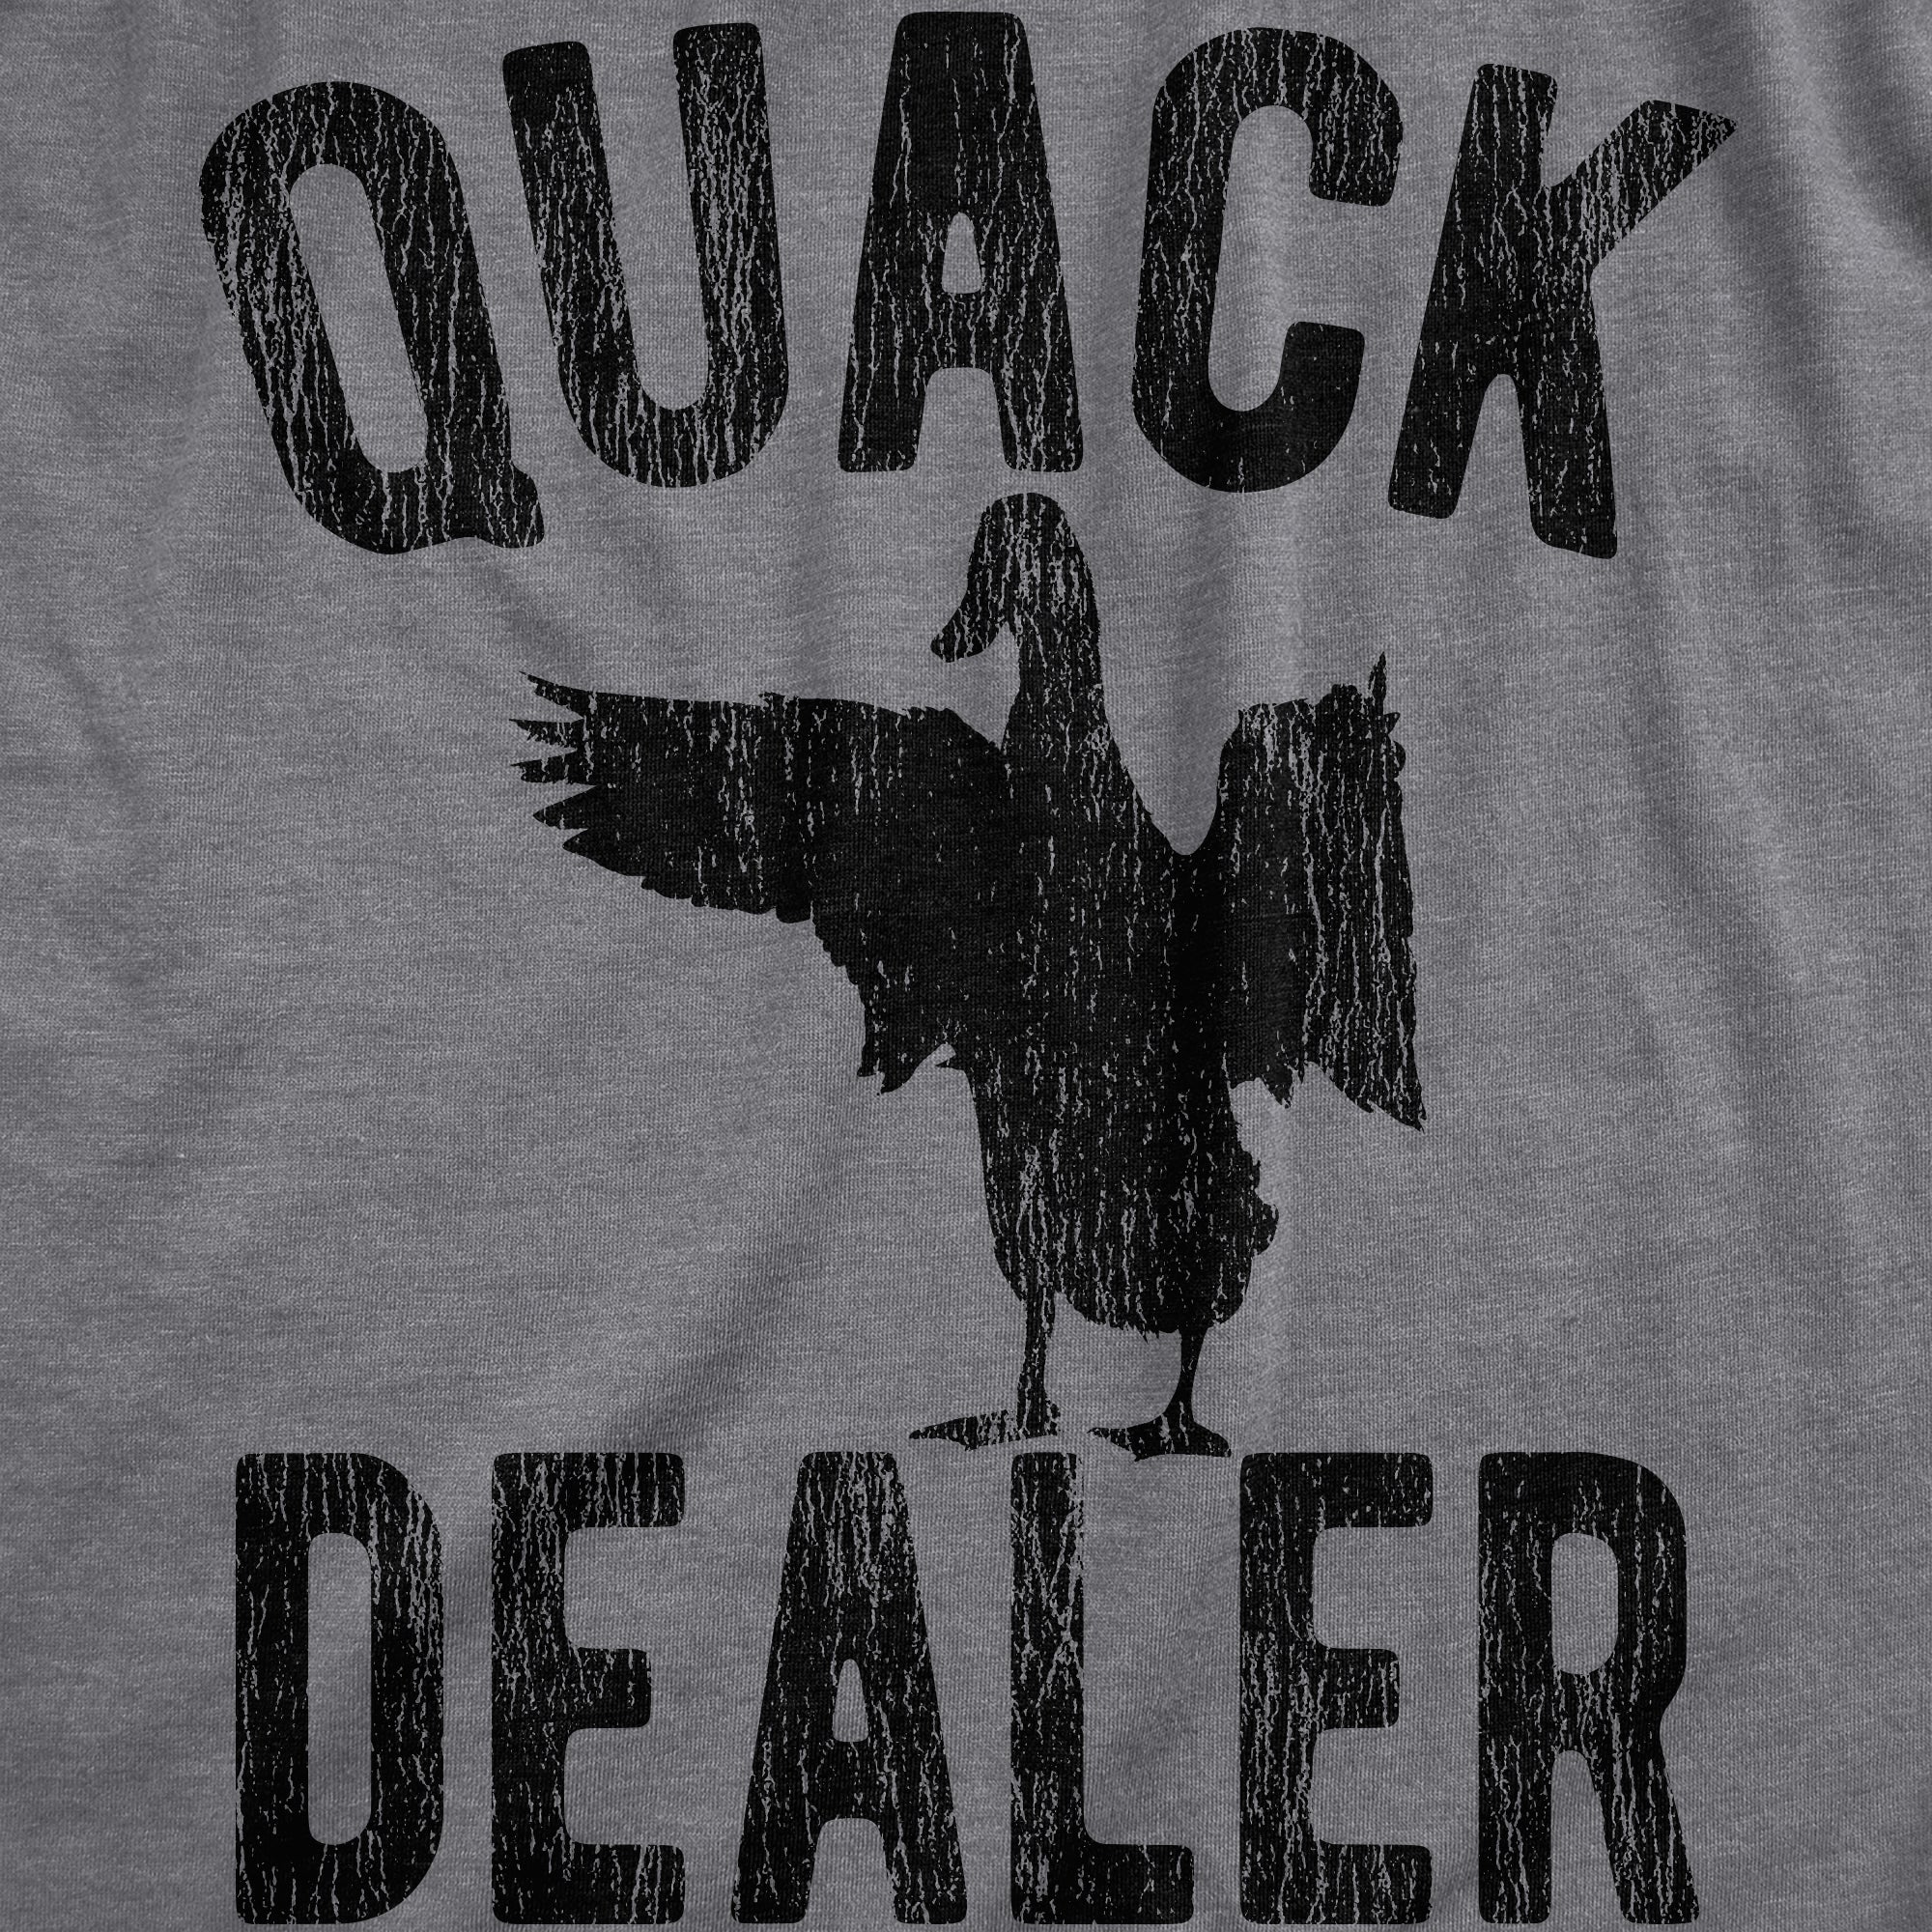 Funny Dark Heather Grey - QUACK Quack Dealer Womens T Shirt Nerdy Animal Sarcastic Tee